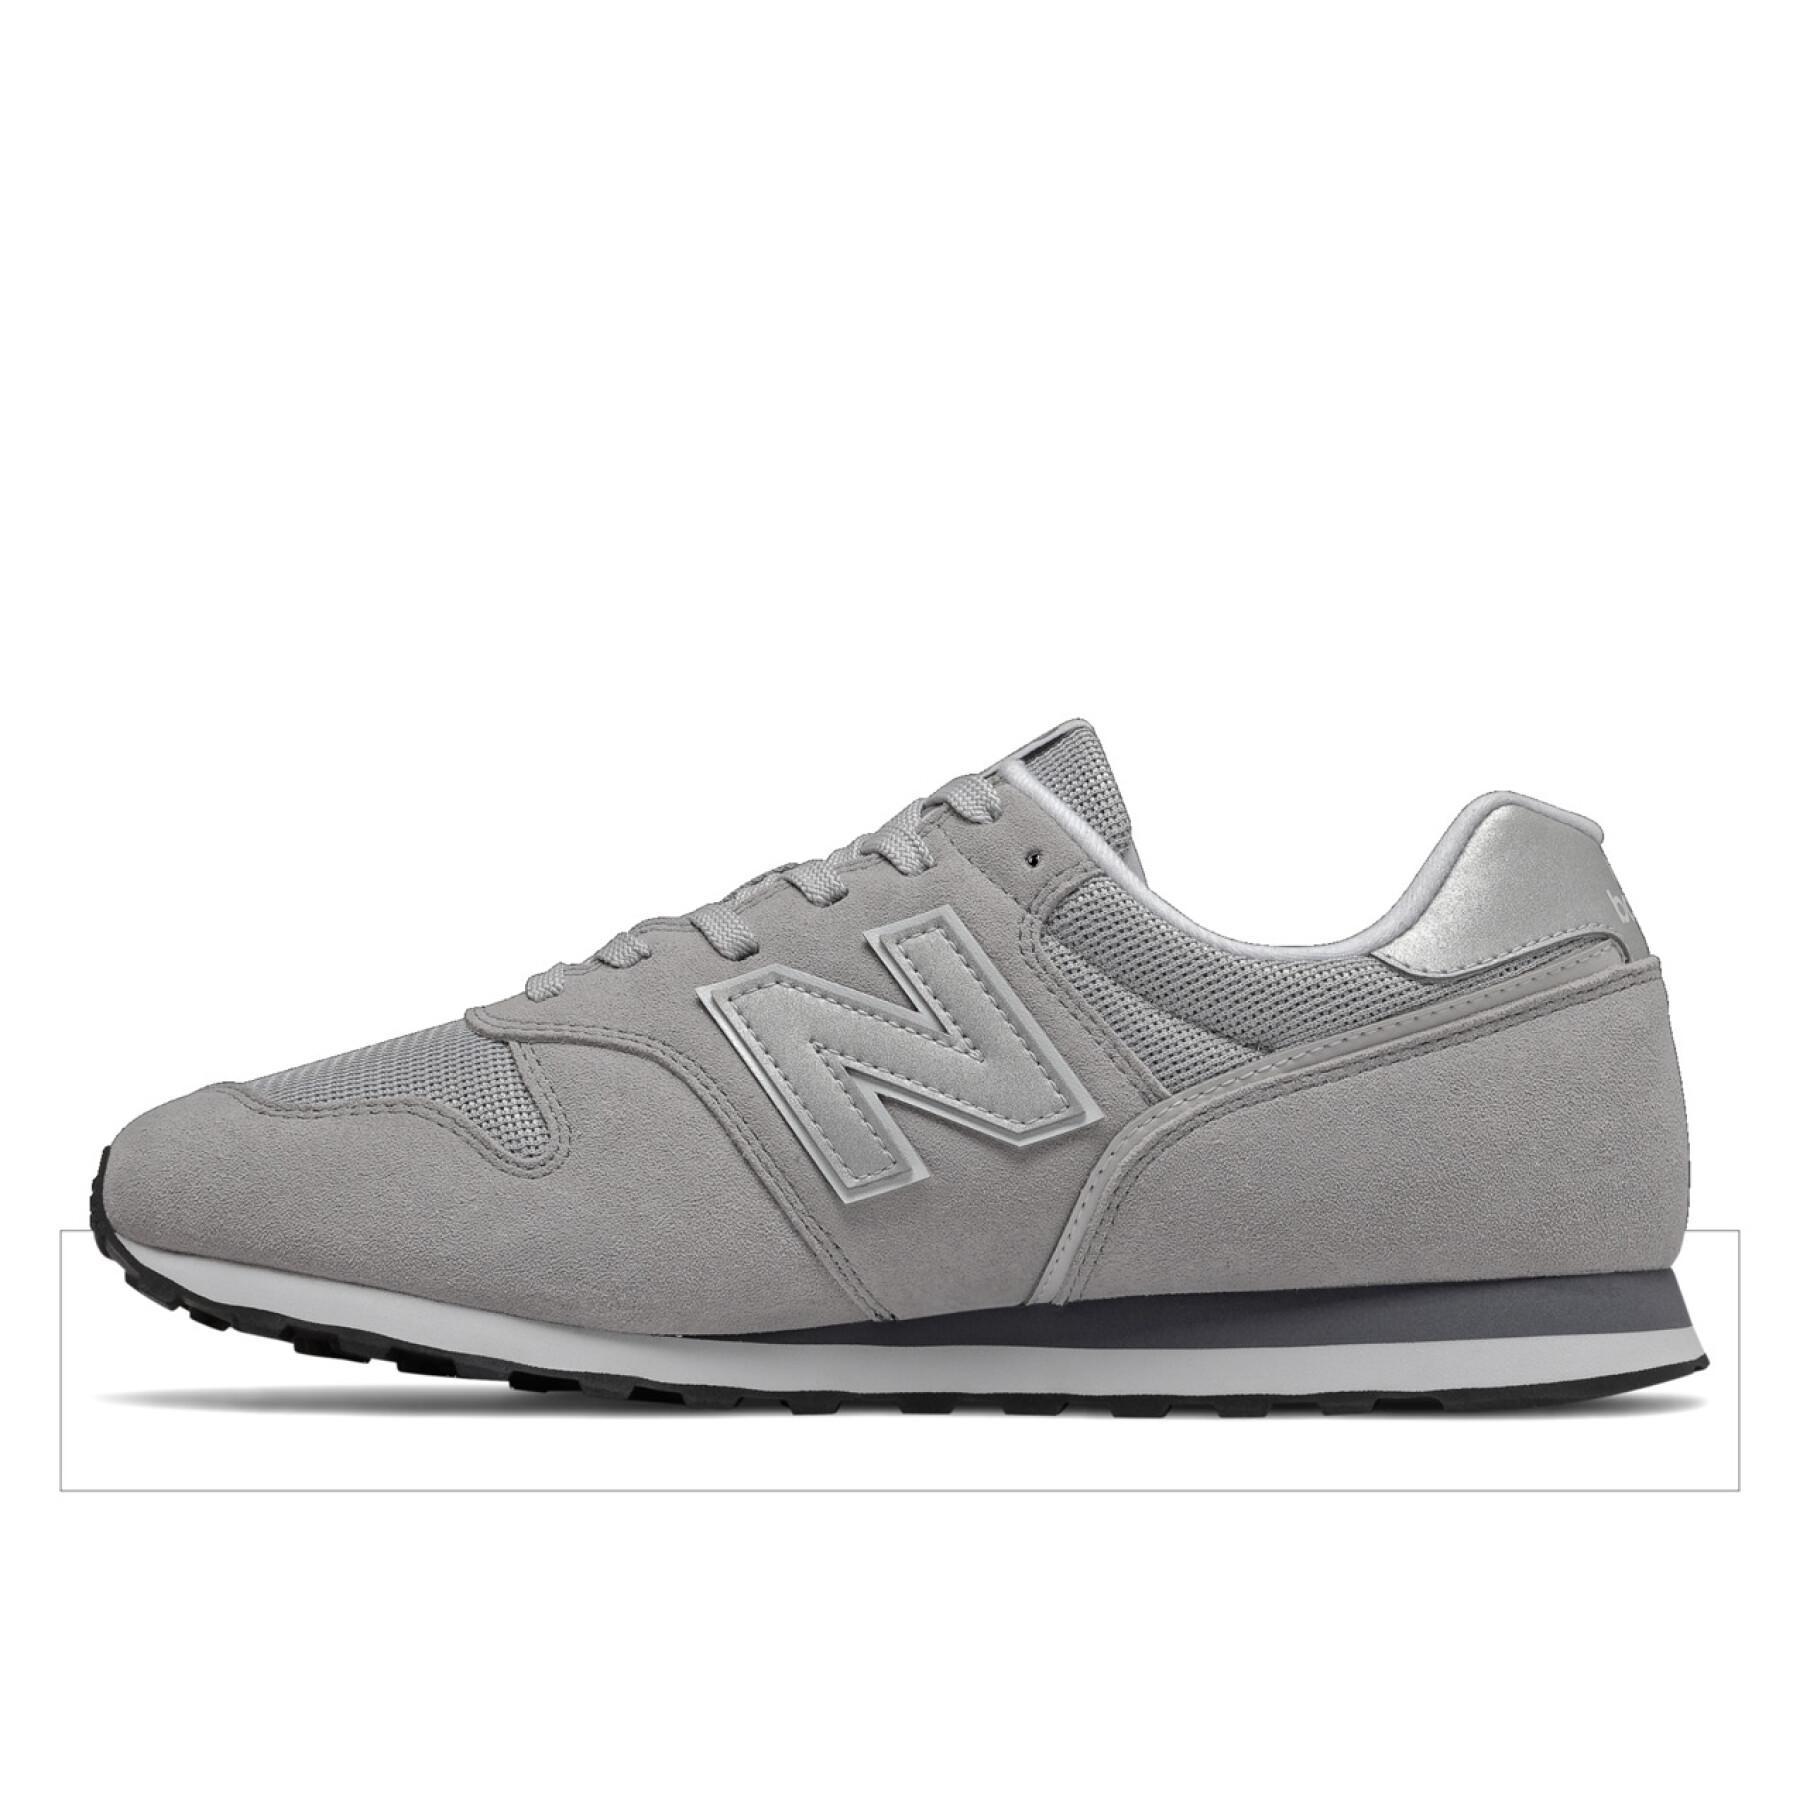 Schuhe New Balance 373